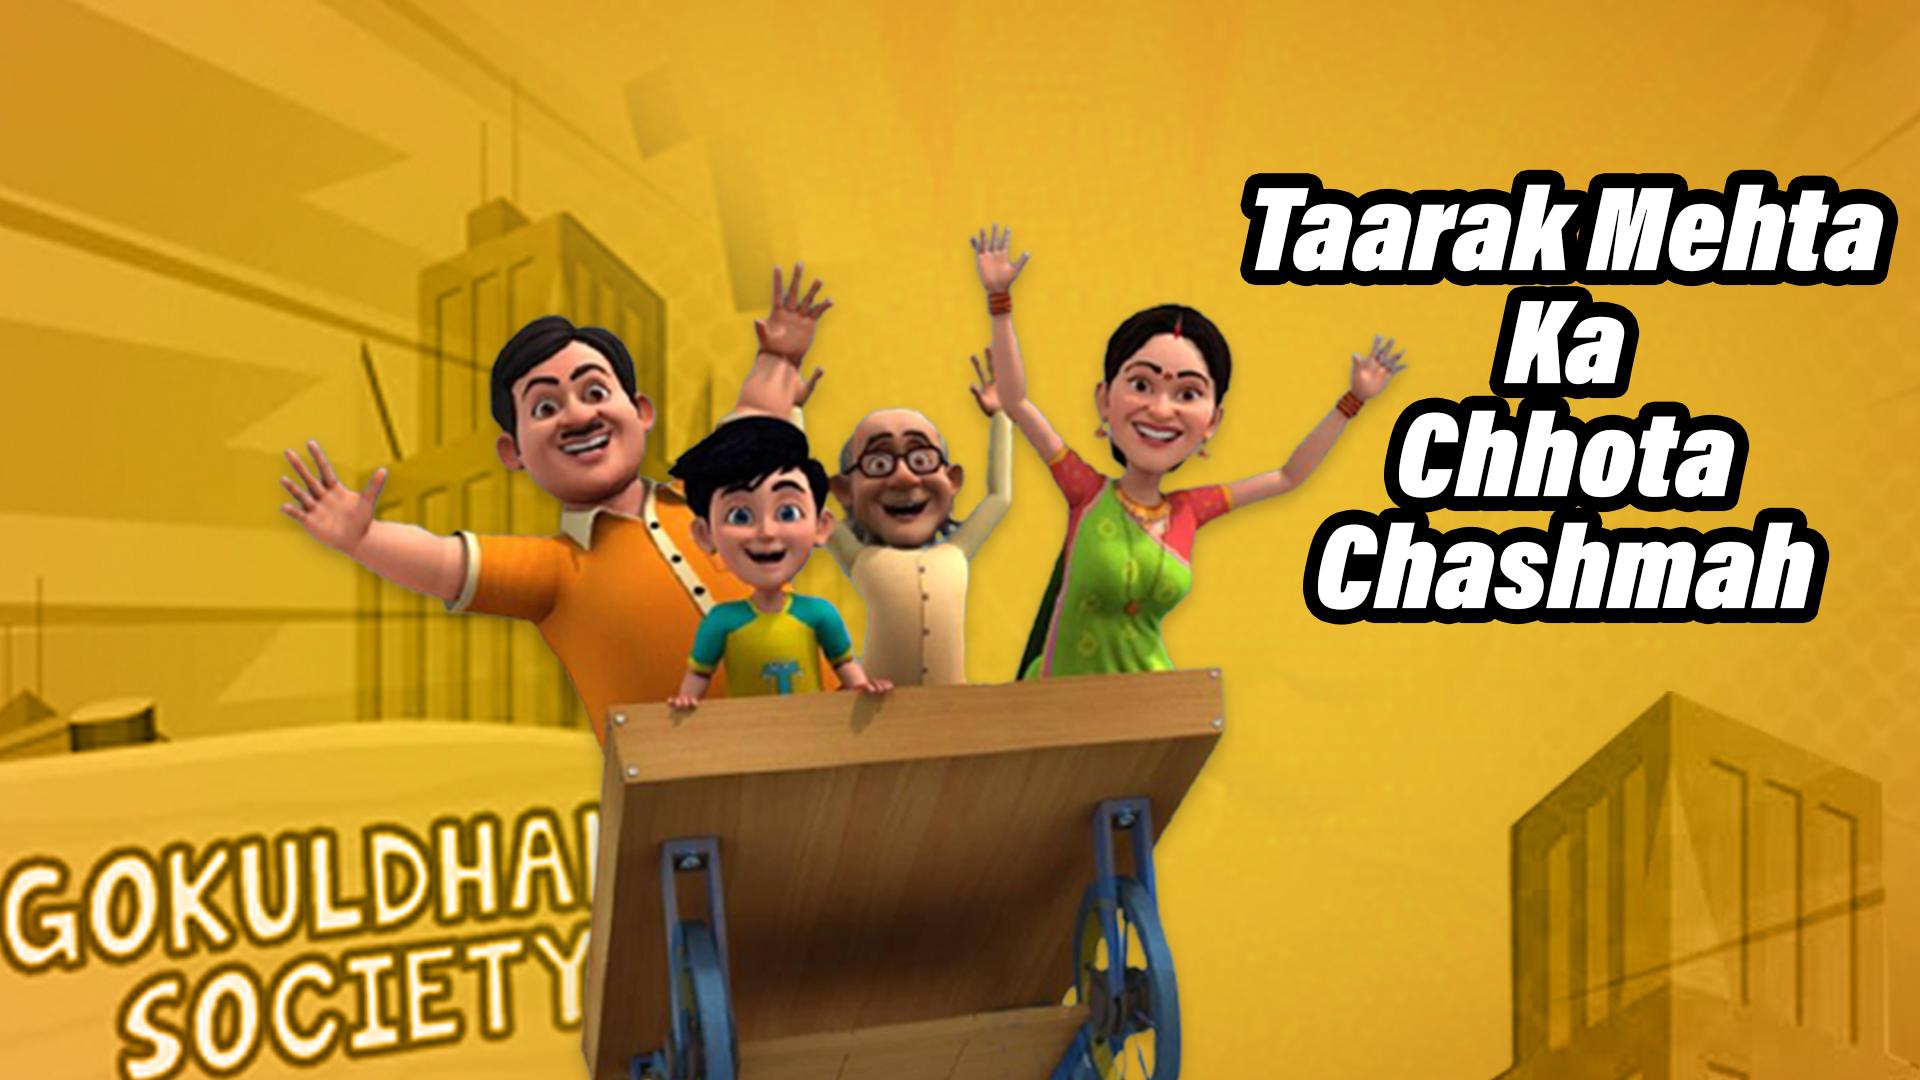 Taarak Mehta Ka Chhota Chashmah - Comedy Show APK pour Android Télécharger